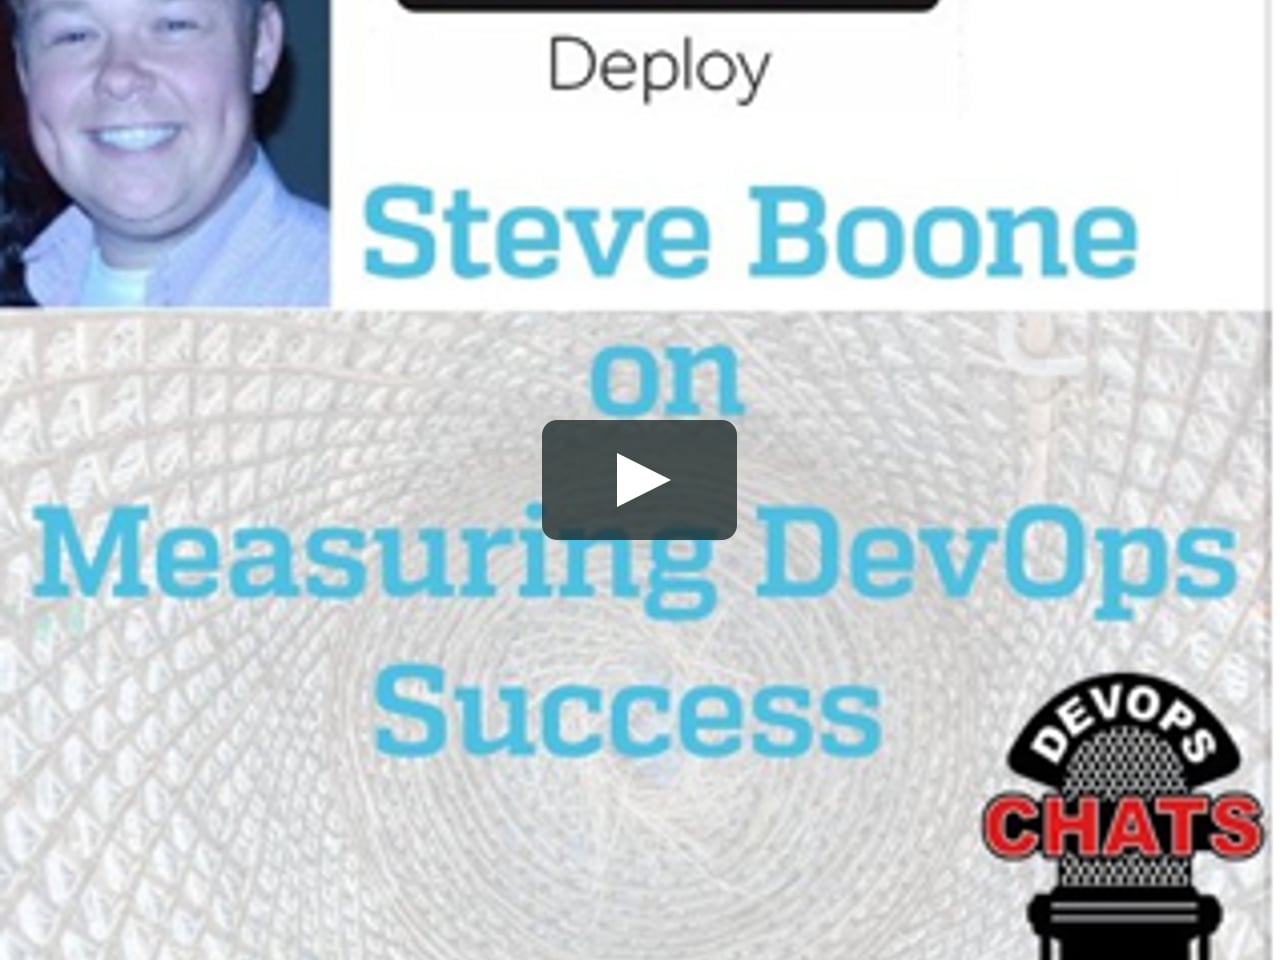 EP 73: Measuring DevOps Success on Vimeo